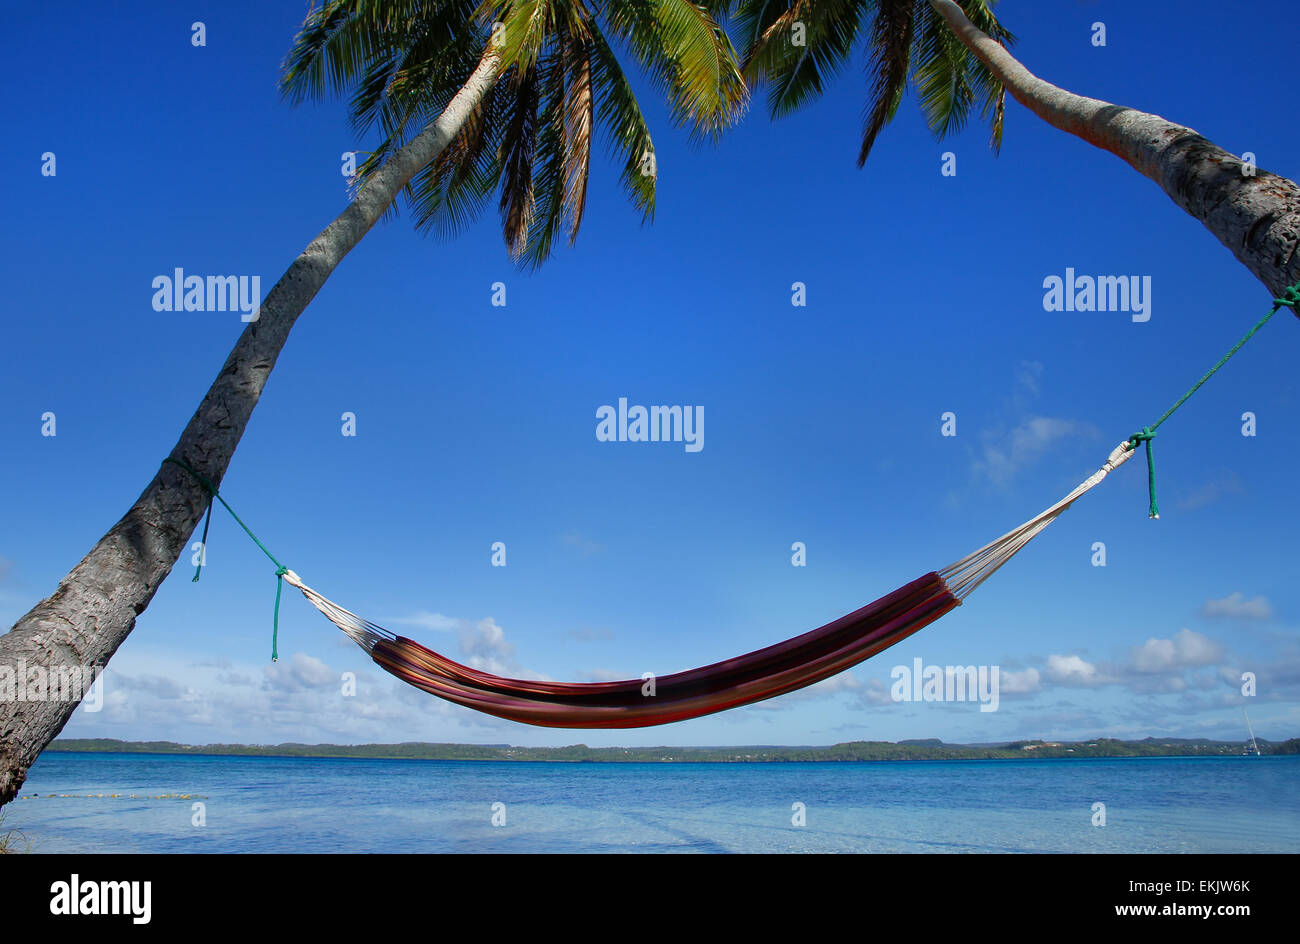 Colorful hammock between palm trees, Ofu island, Vavau group, Tonga Stock Photo